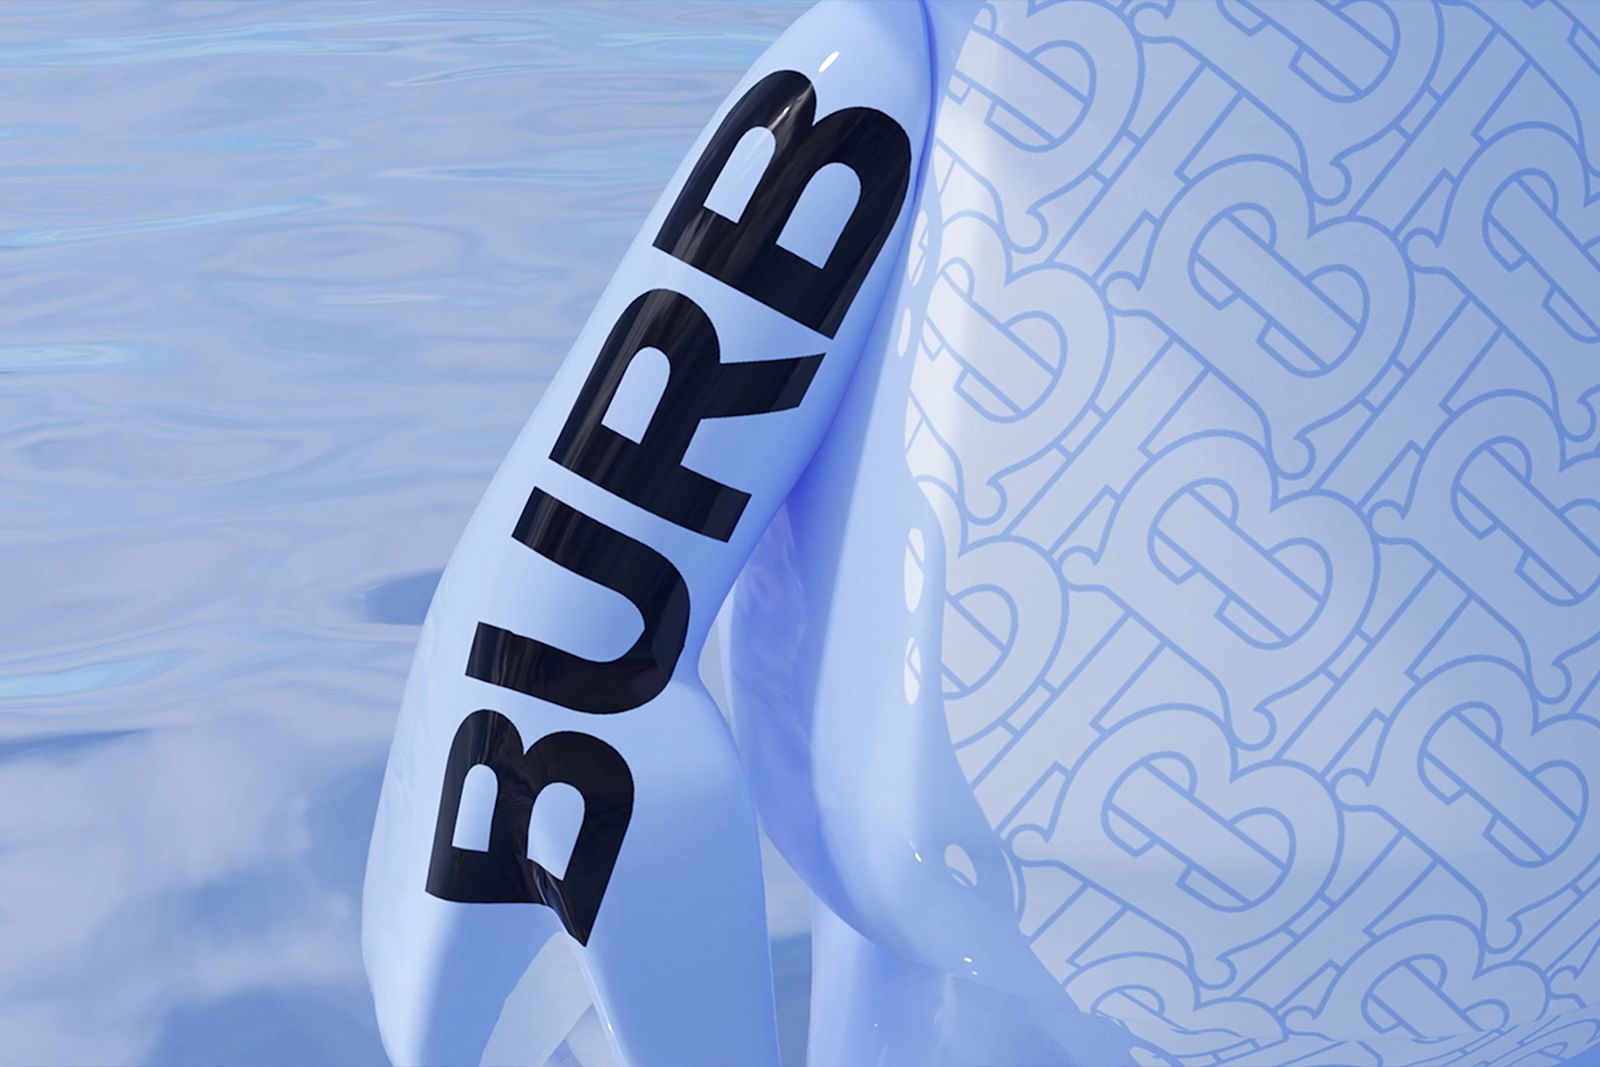 burberry-nft-blankos-block-party-03